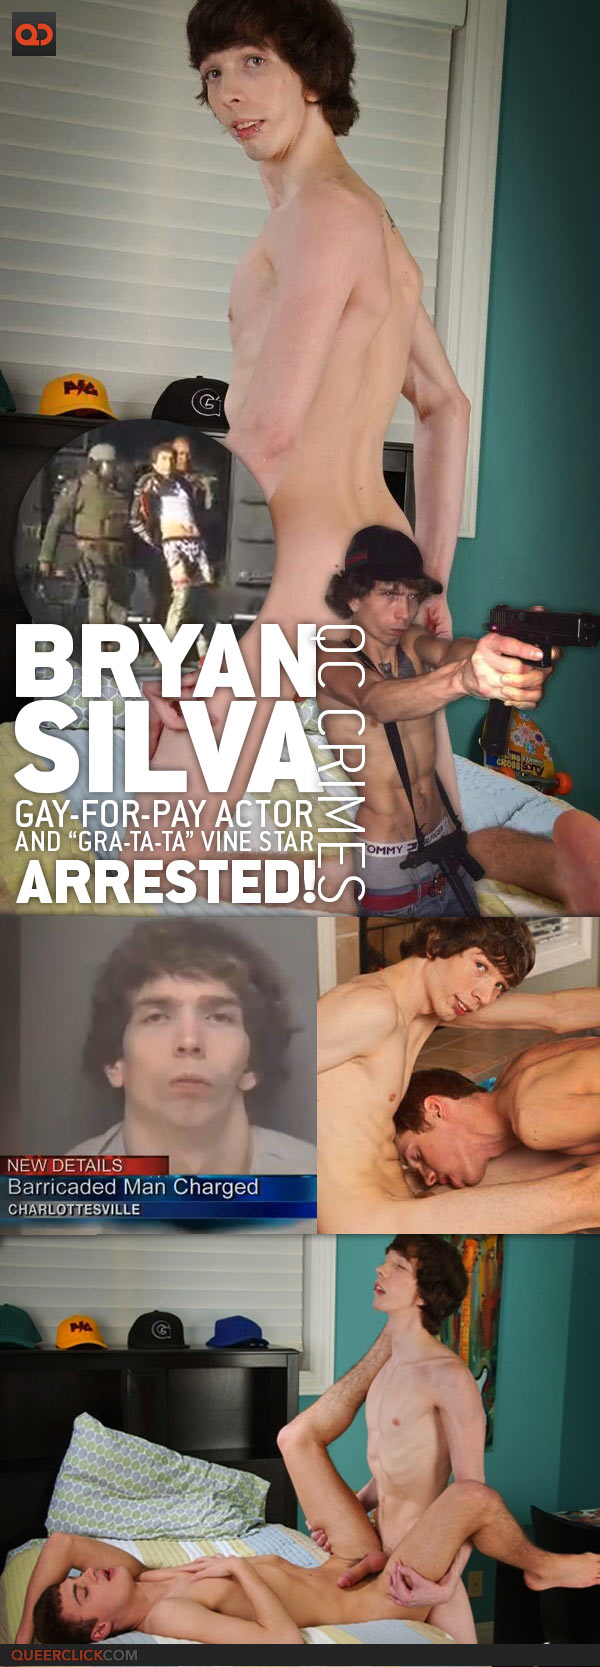 Bryan silva porn